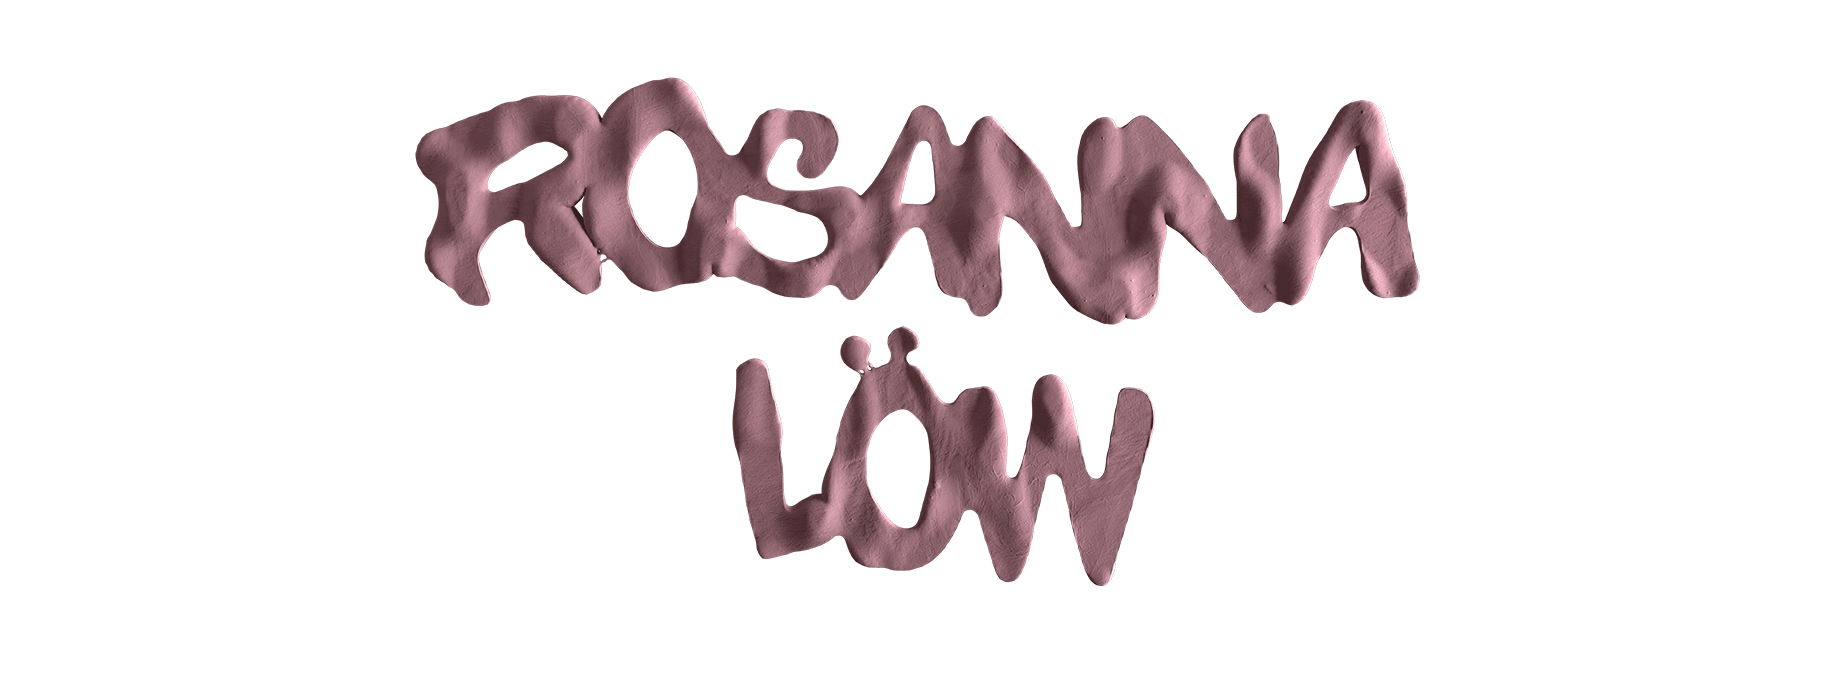 Rosanna Löw